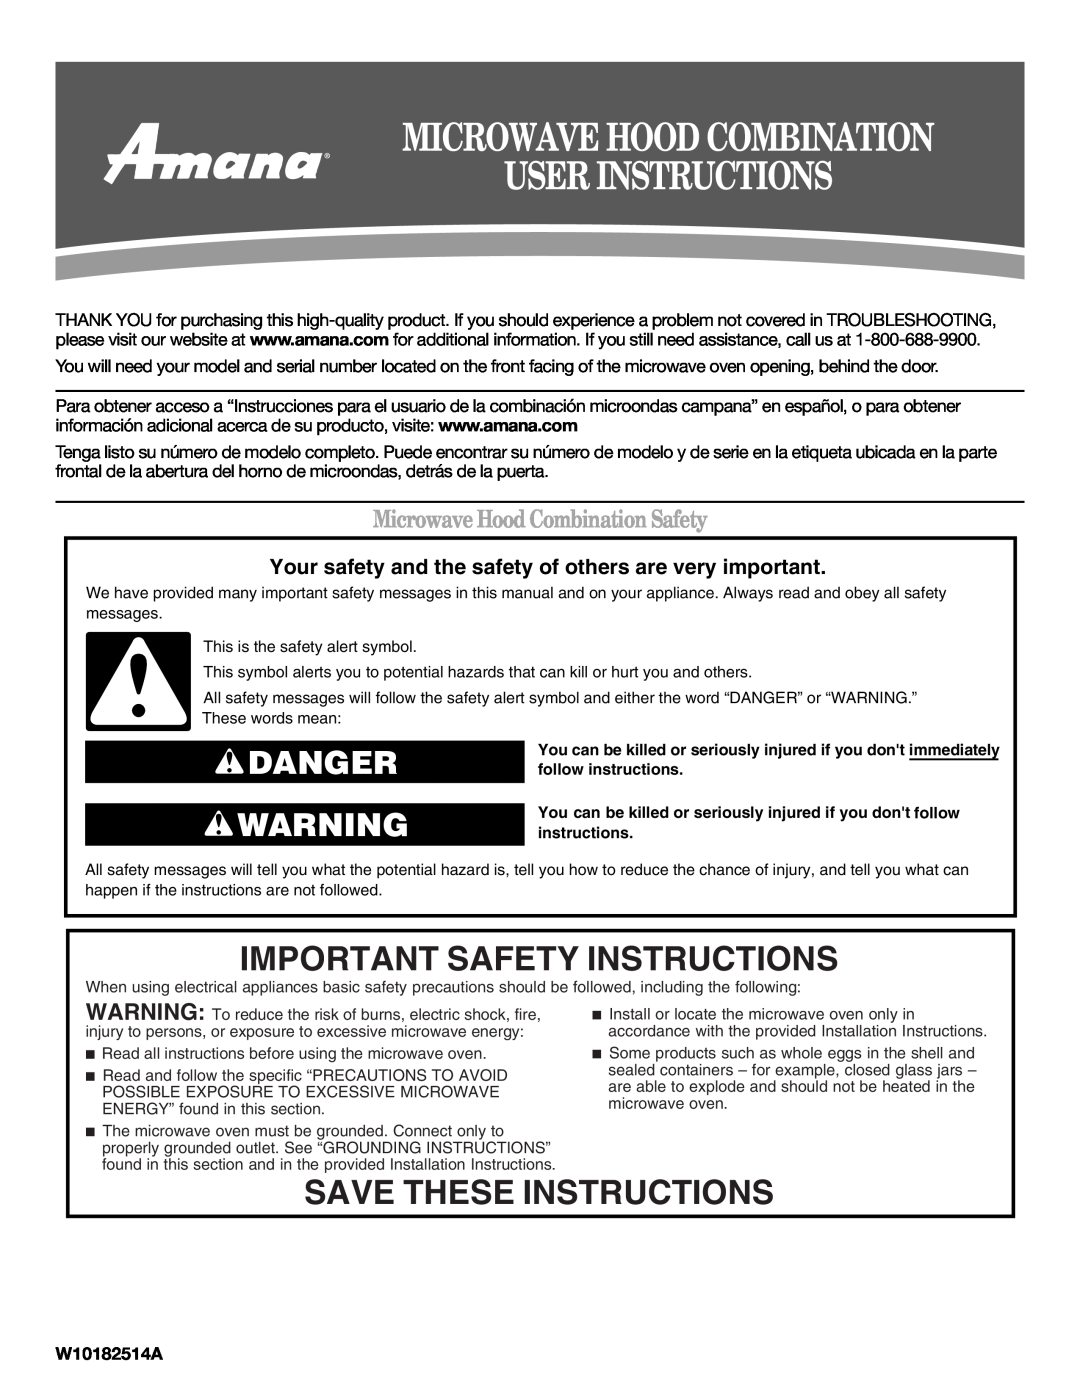 Amana AMV1160VAW important safety instructions Important Safety Instructions, Save These Instructions, Danger 